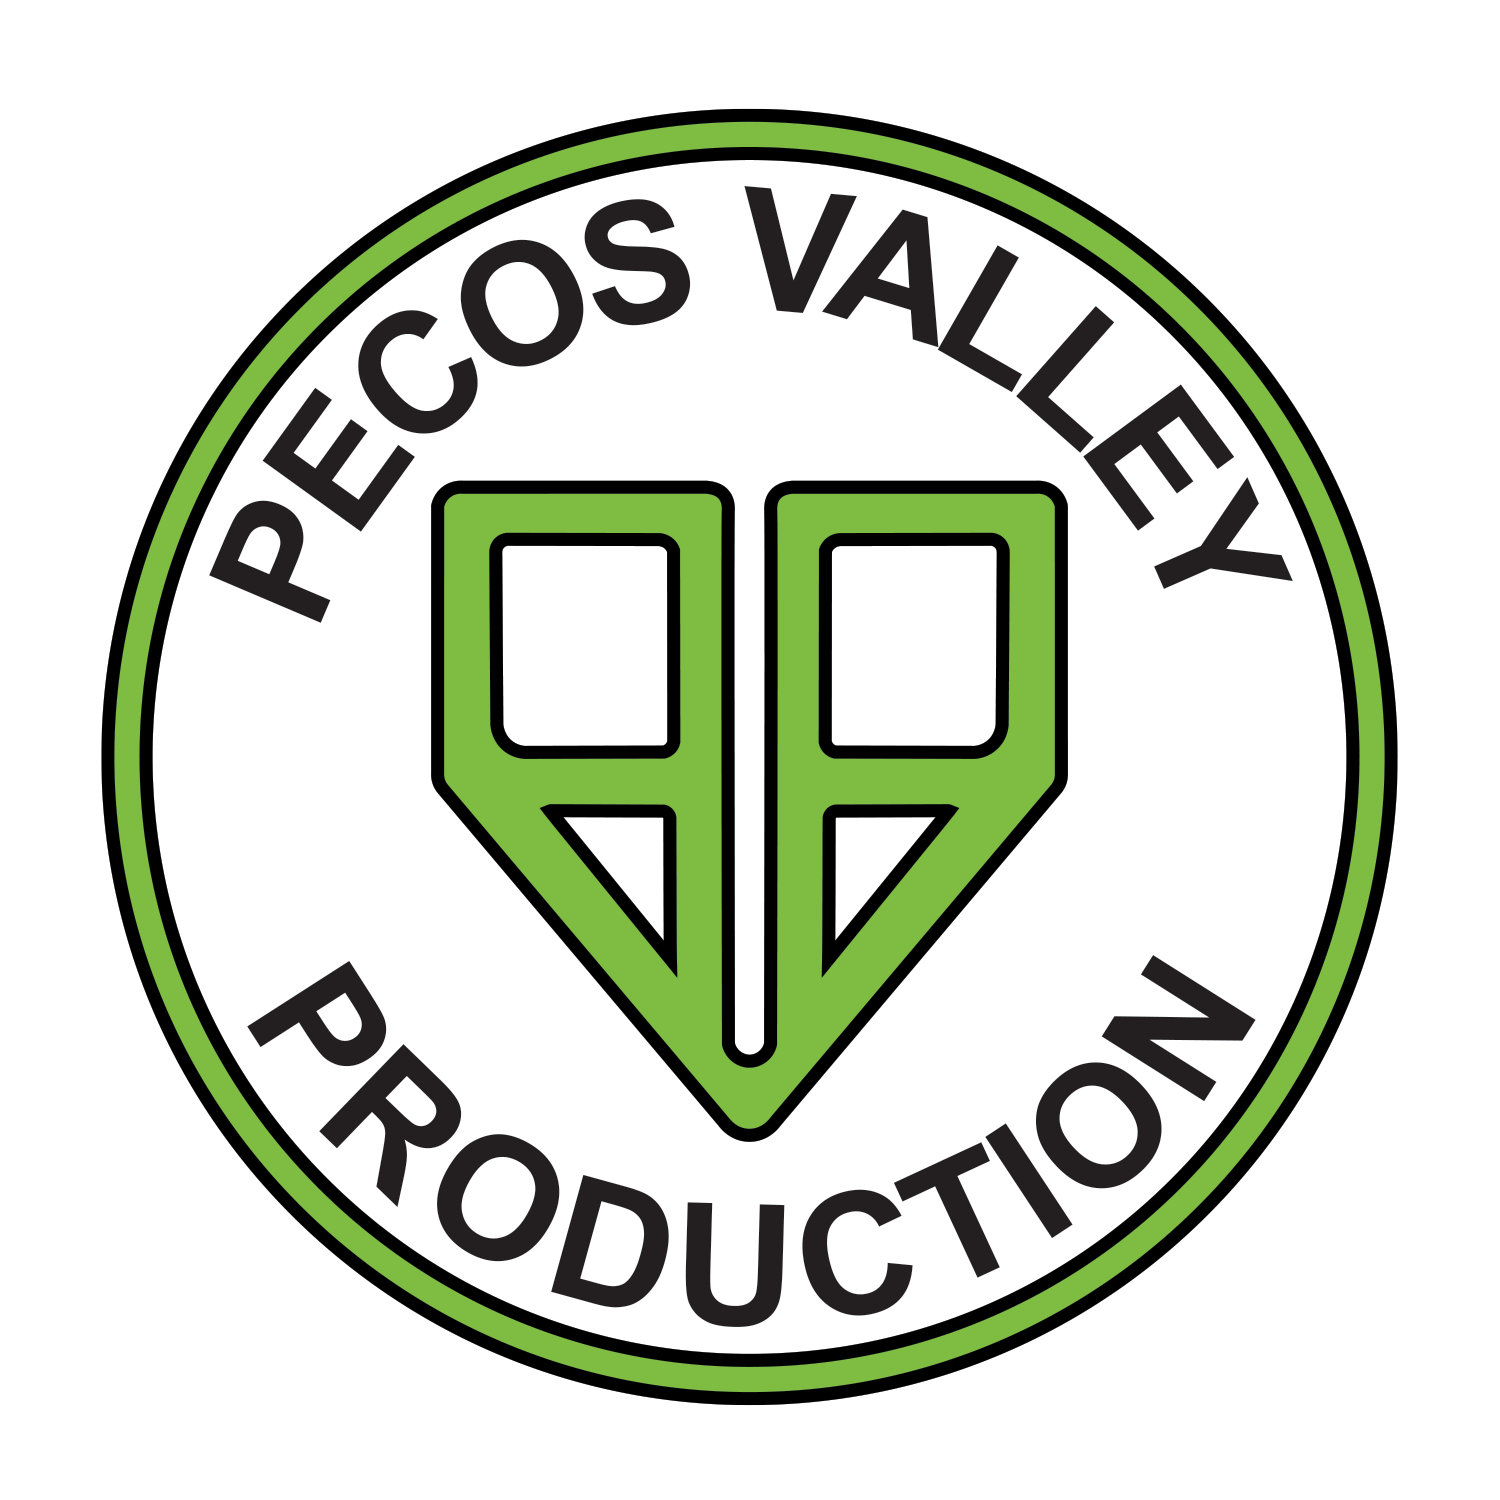 Pecos Valley Productions - Las Cruces logo